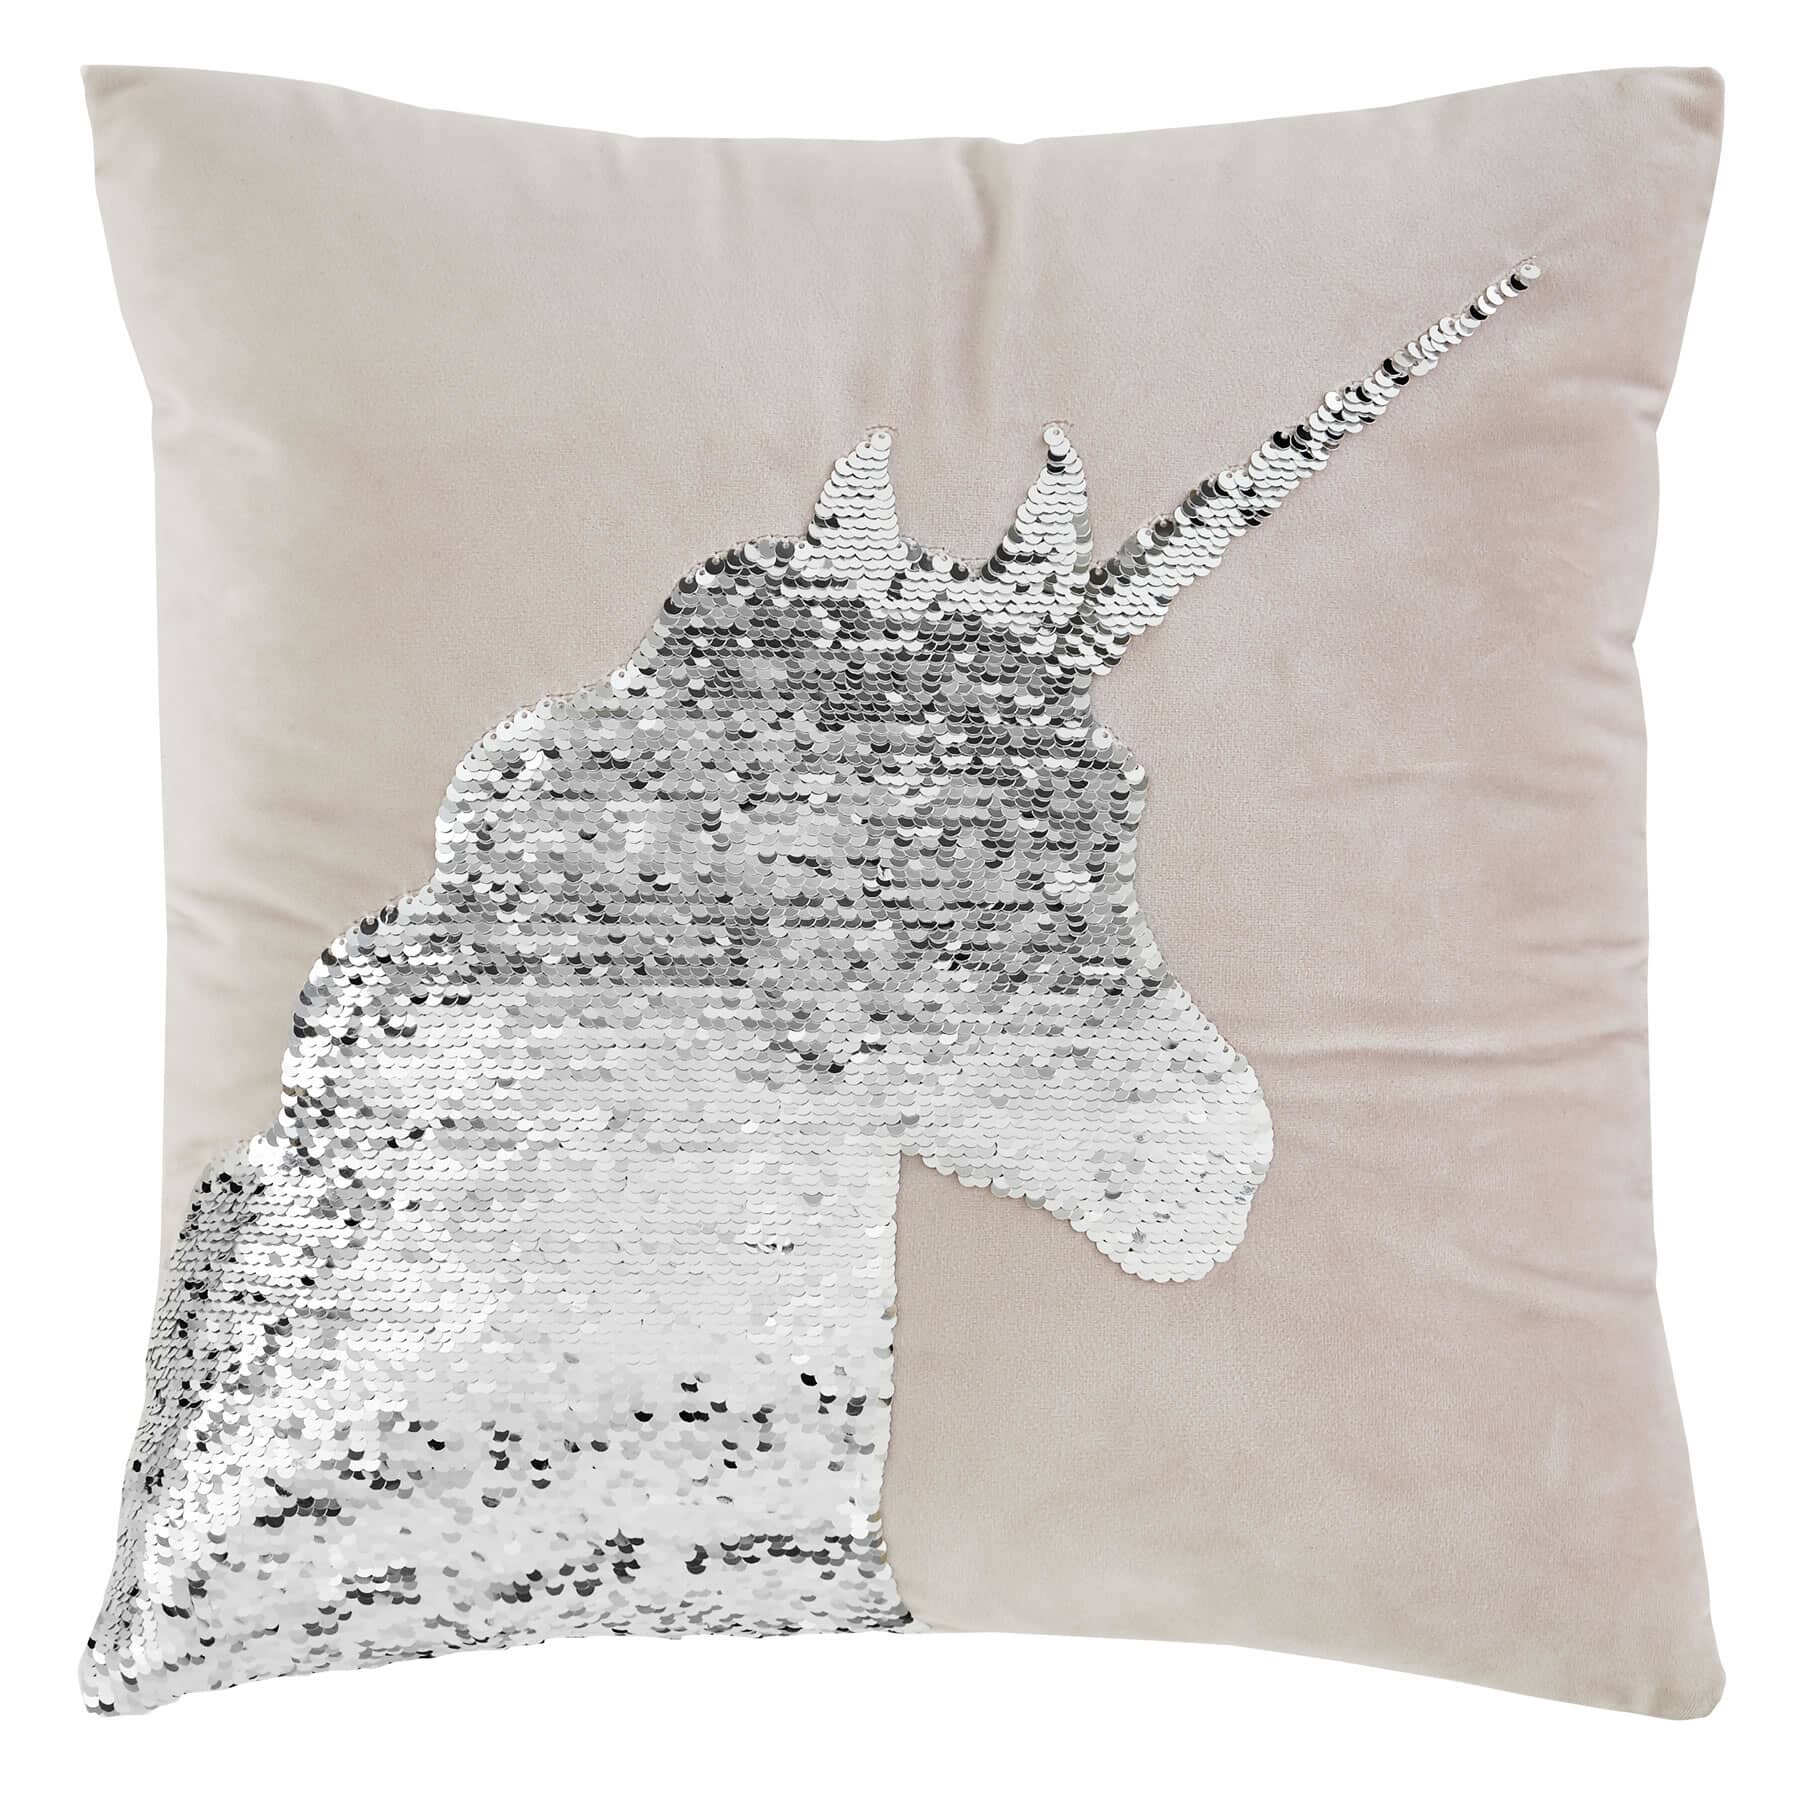 Sequin Unicorn Cushion Cover